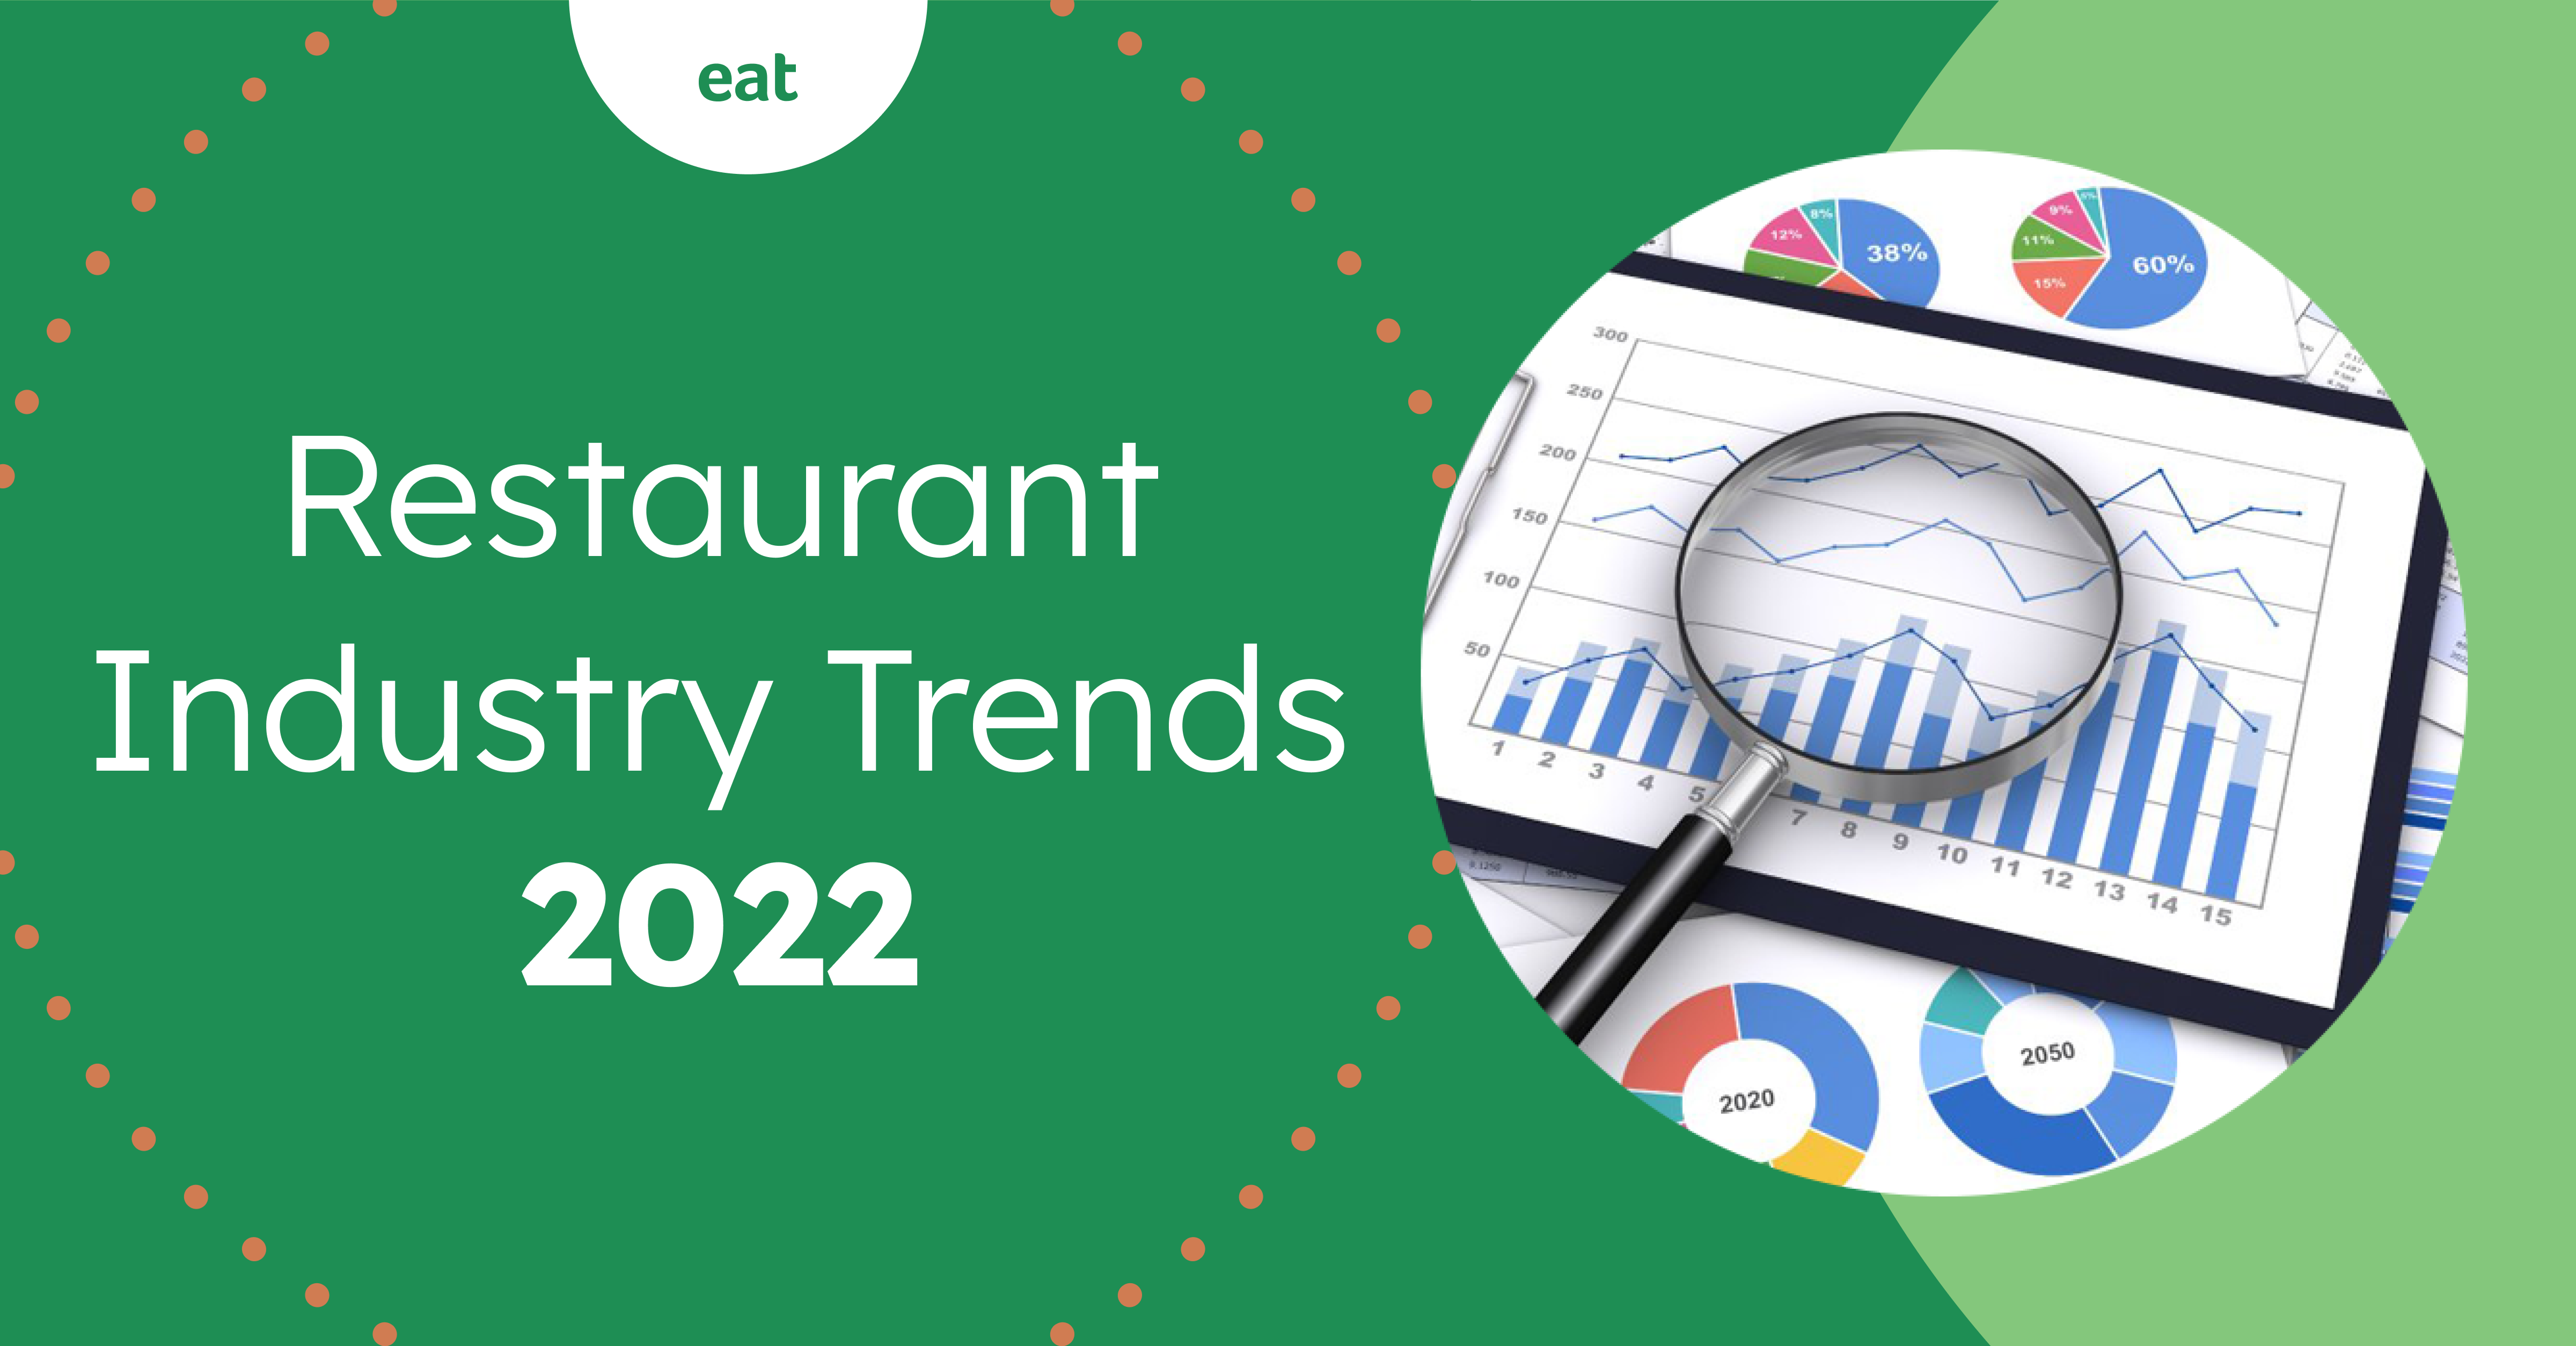 5 Restaurant Industry Trends for 2022